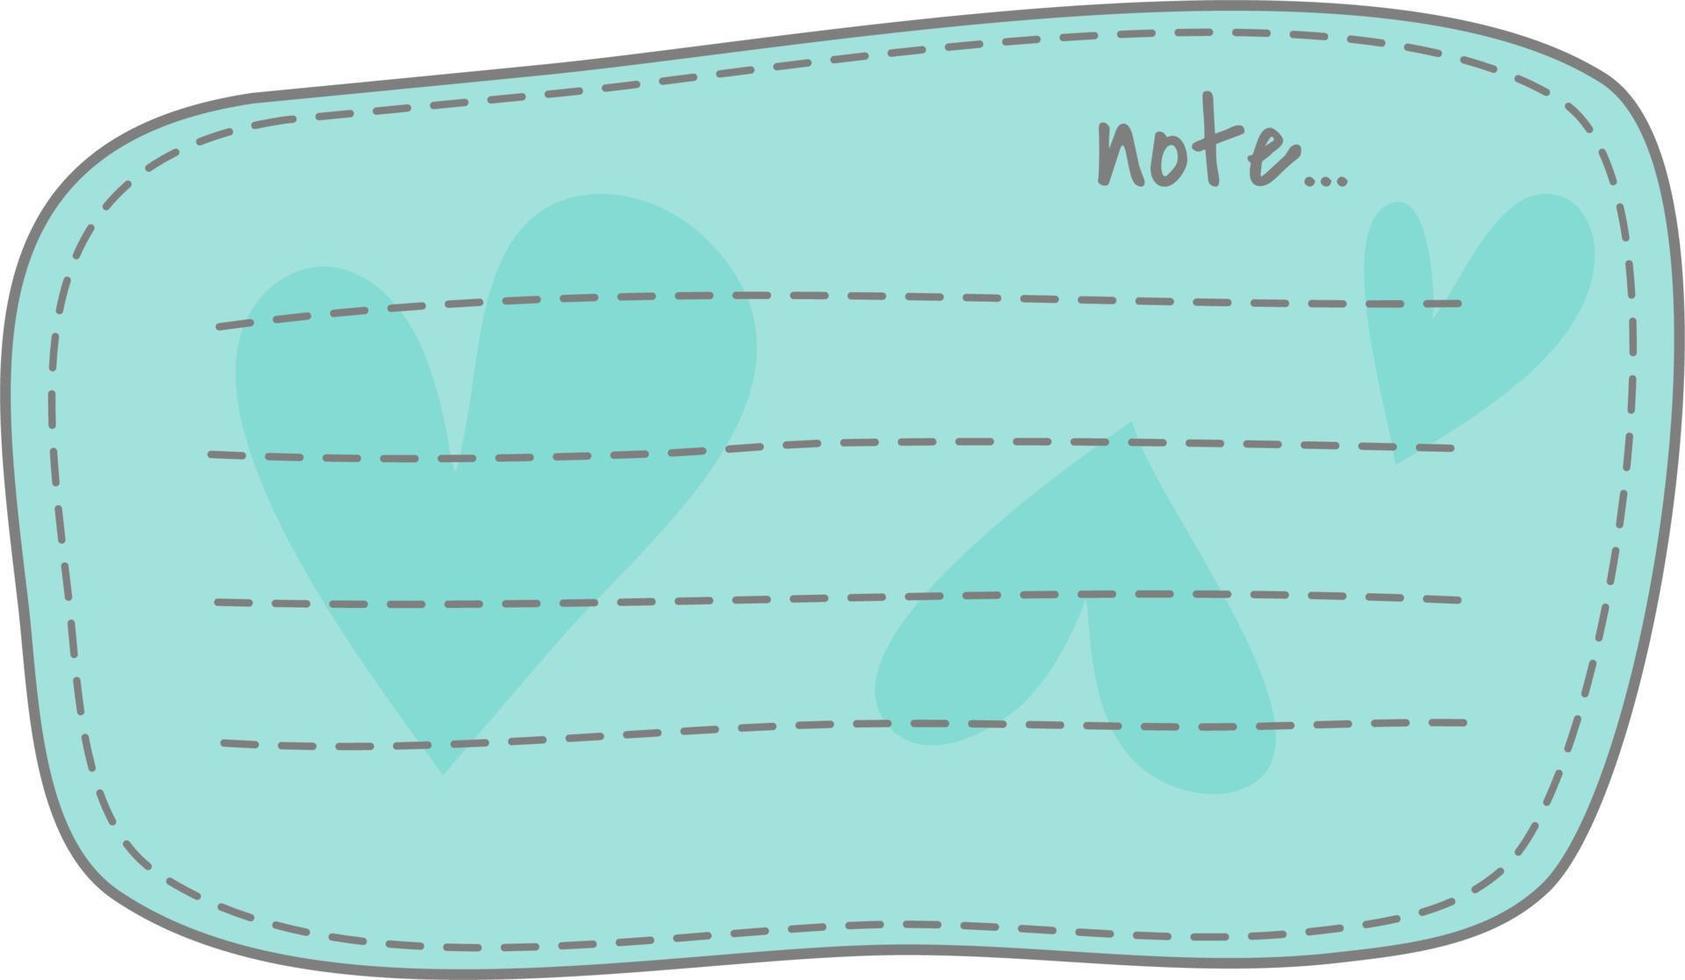 Cute note card vector